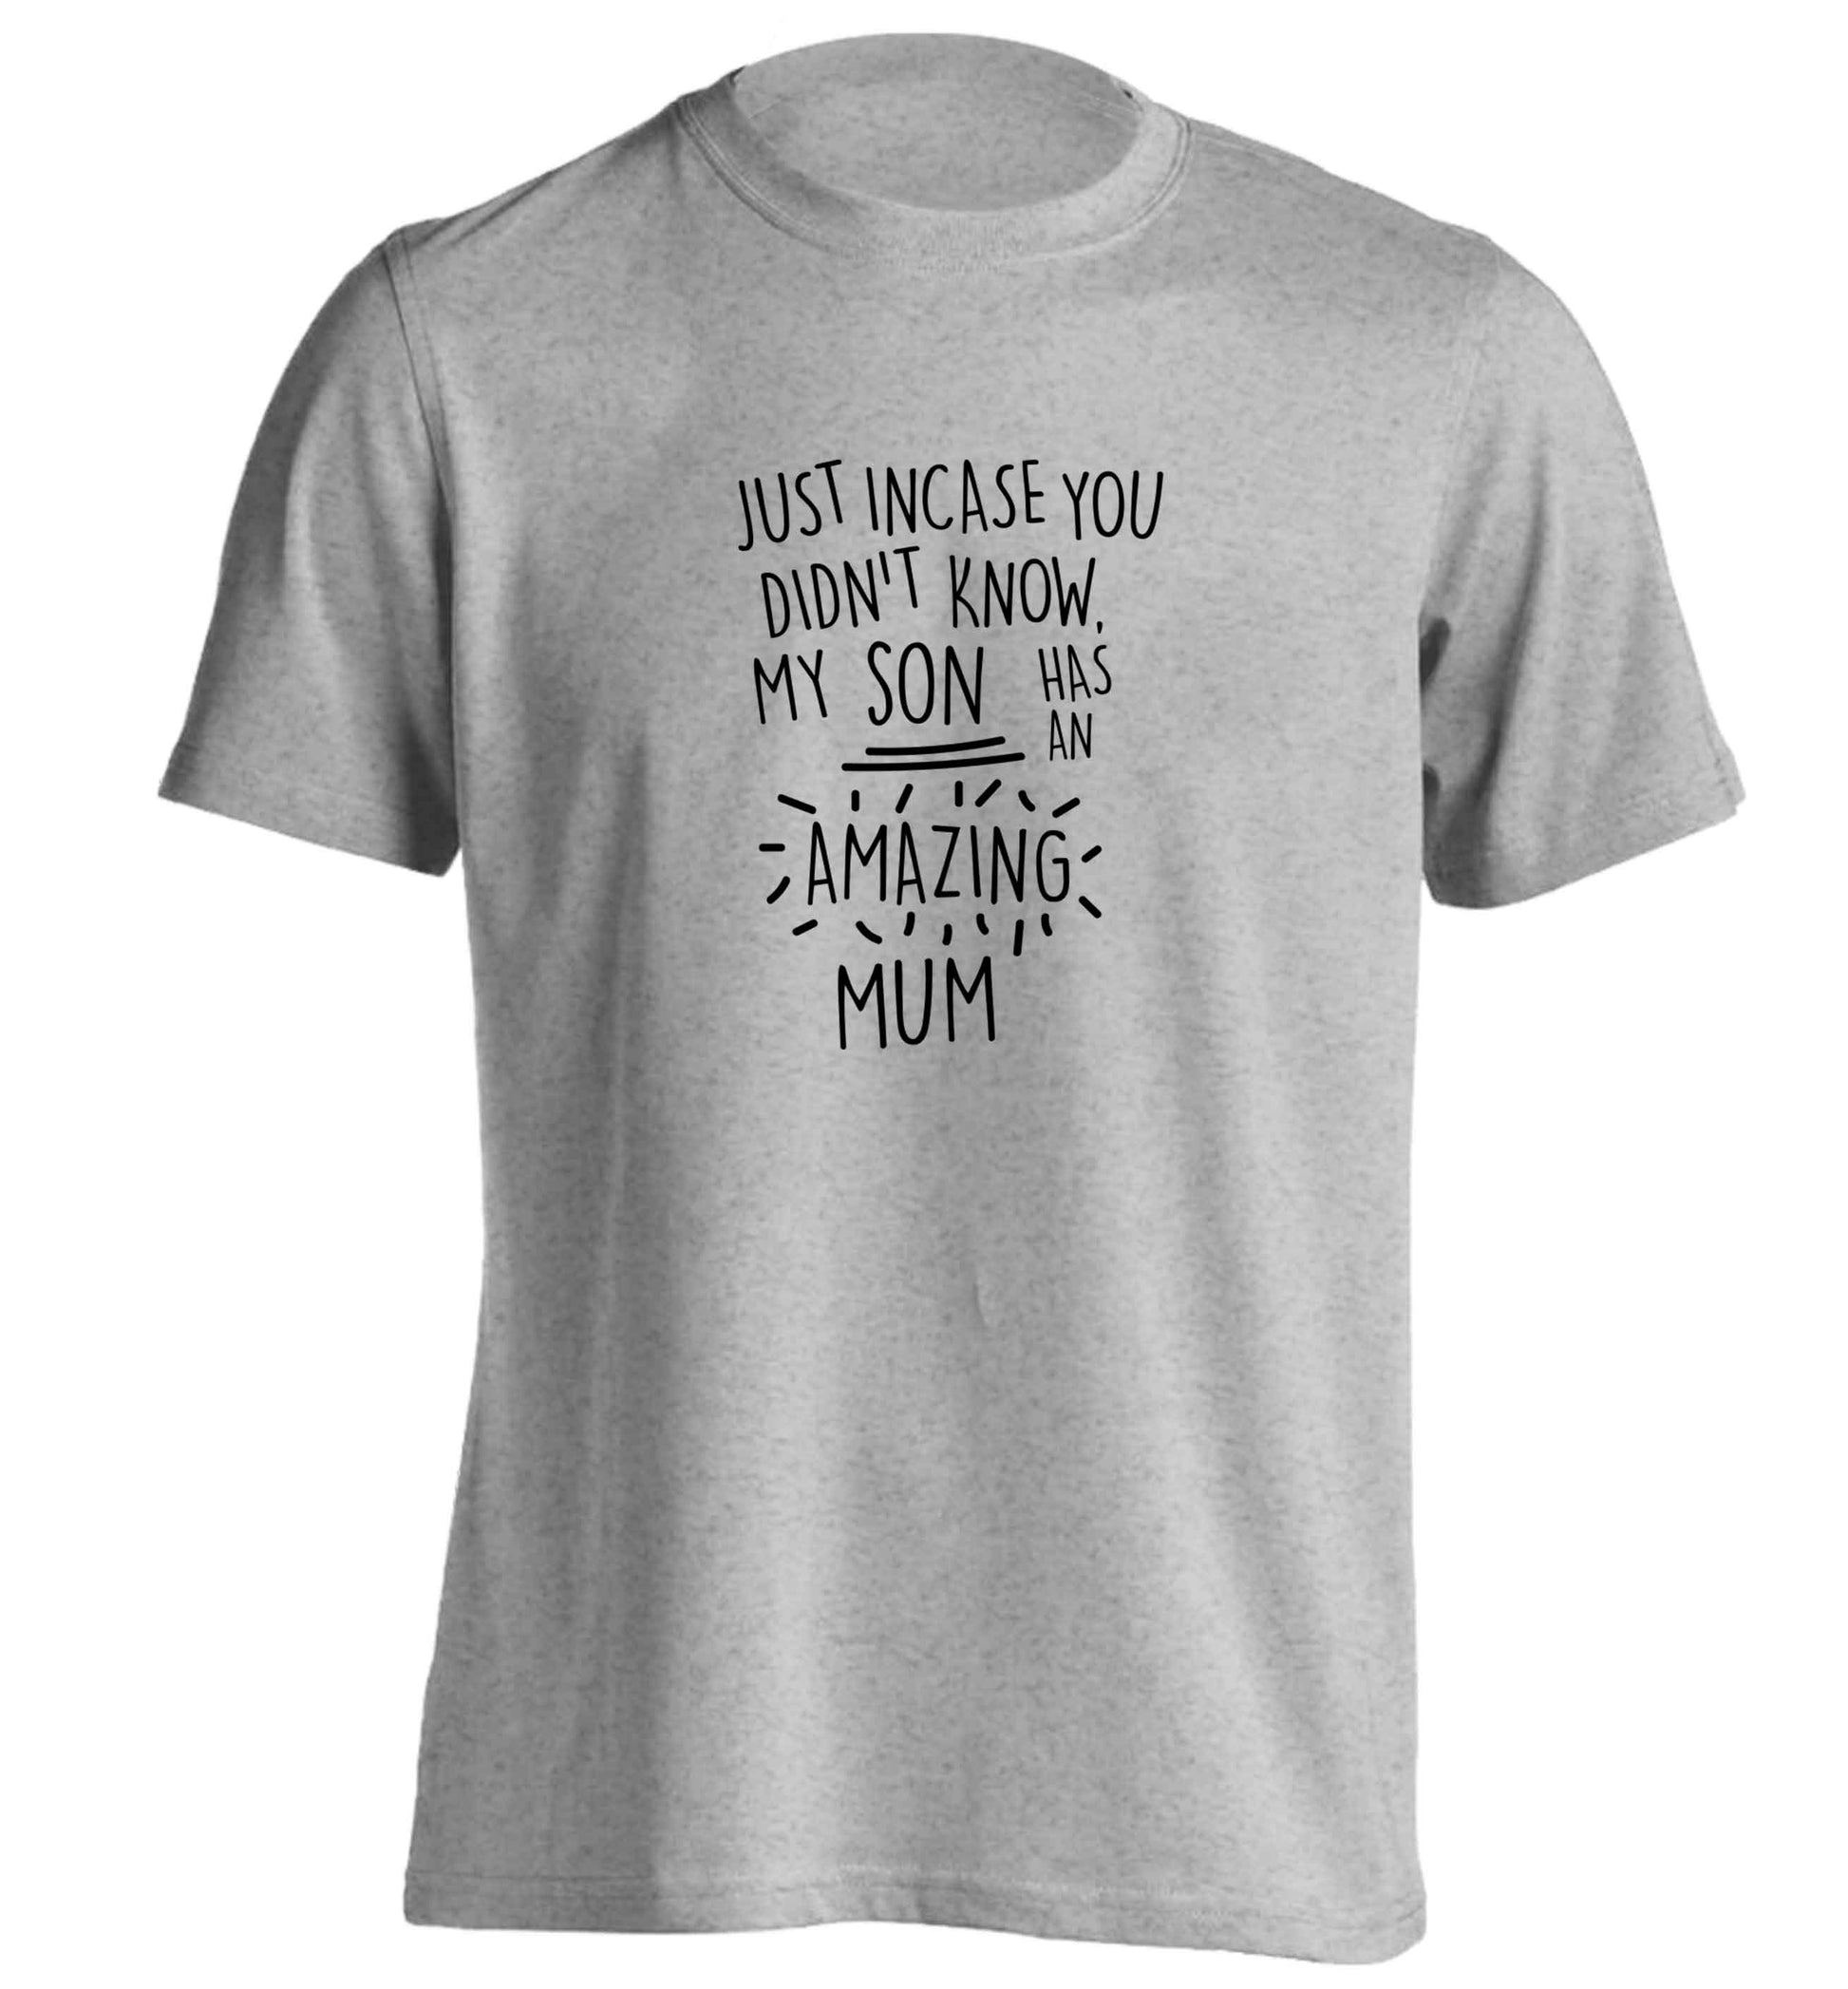 Just incase you didn't know my son has an amazing mum adults unisex grey Tshirt 2XL